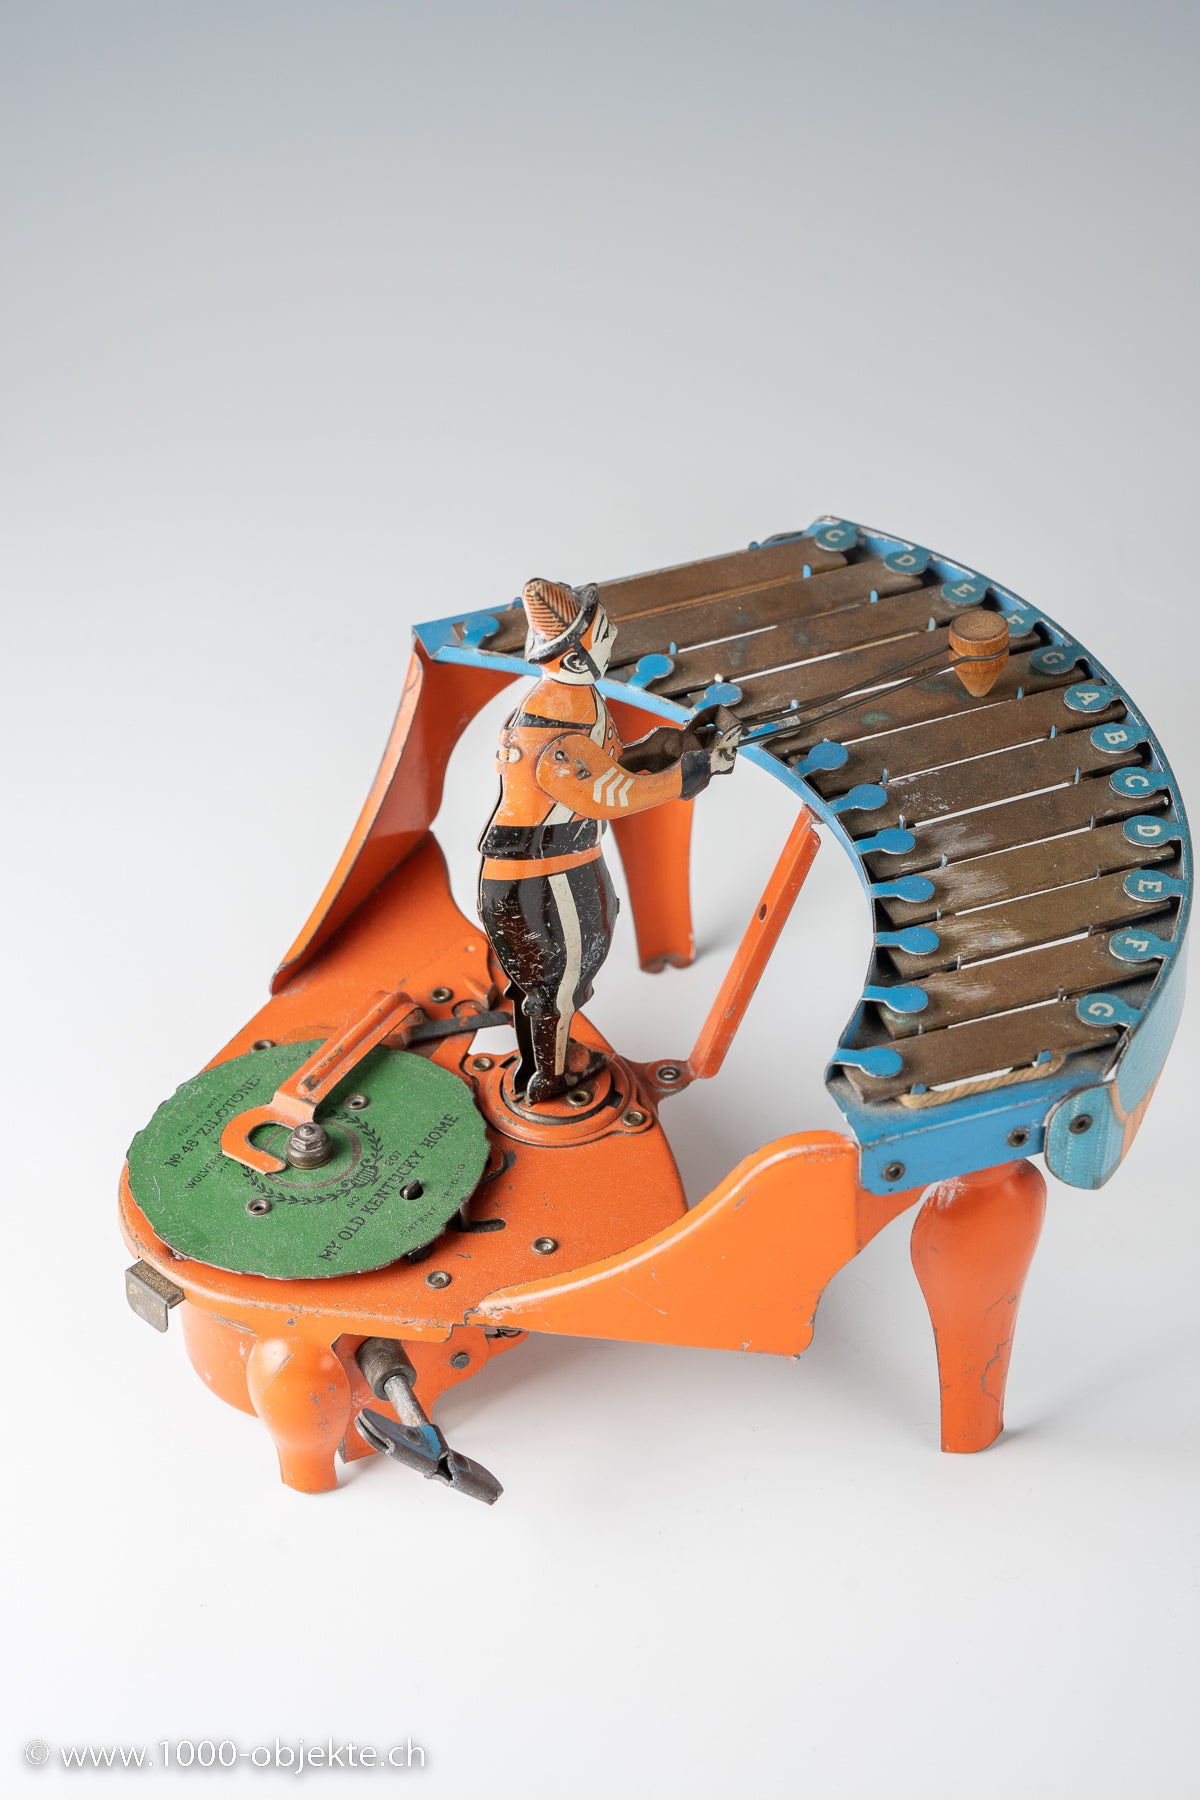 Wolverine Zilotone Musical Tin Litho Wind-Up Toythe Circa 1940S Wind-Up Clockwork Toy With Three Original Discs.